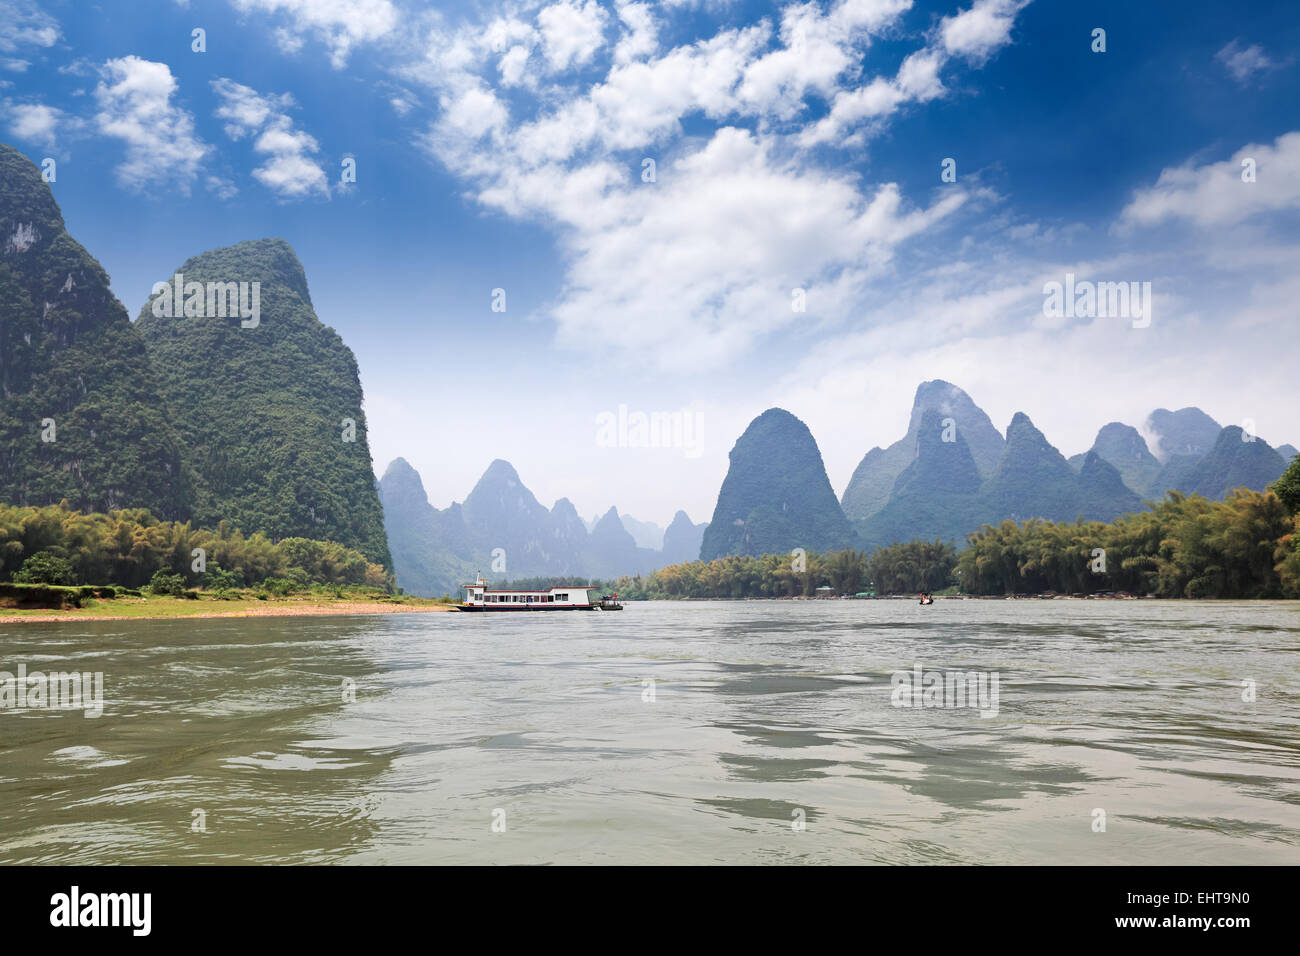 Hermosos paisajes de karst en el río Lijiang Foto de stock